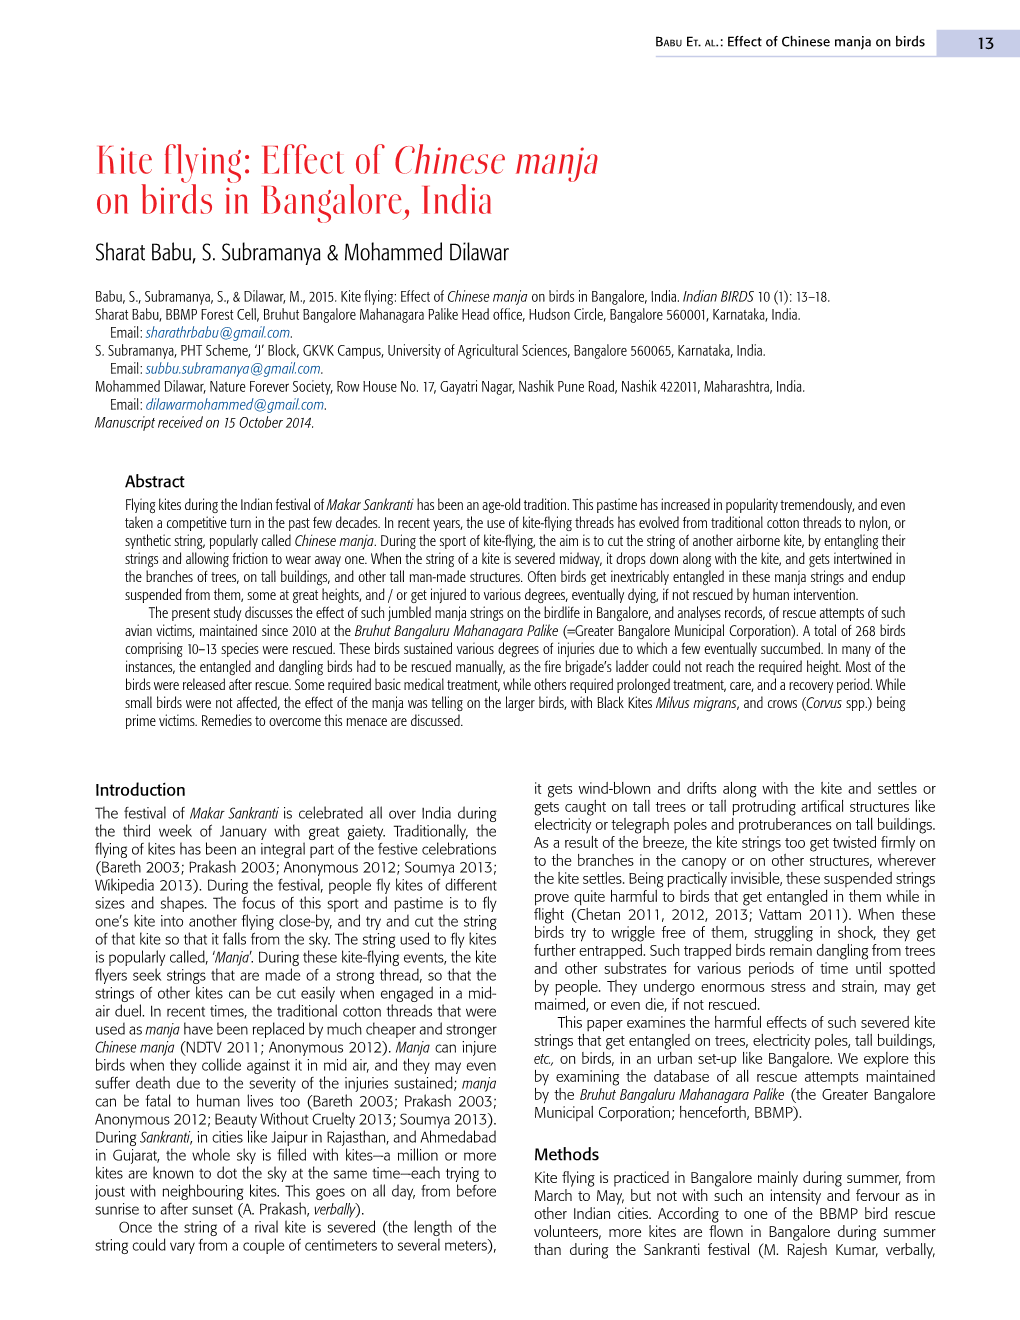 Kite Flying: Effect of Chinese Manja on Birds in Bangalore, India Sharat Babu, S